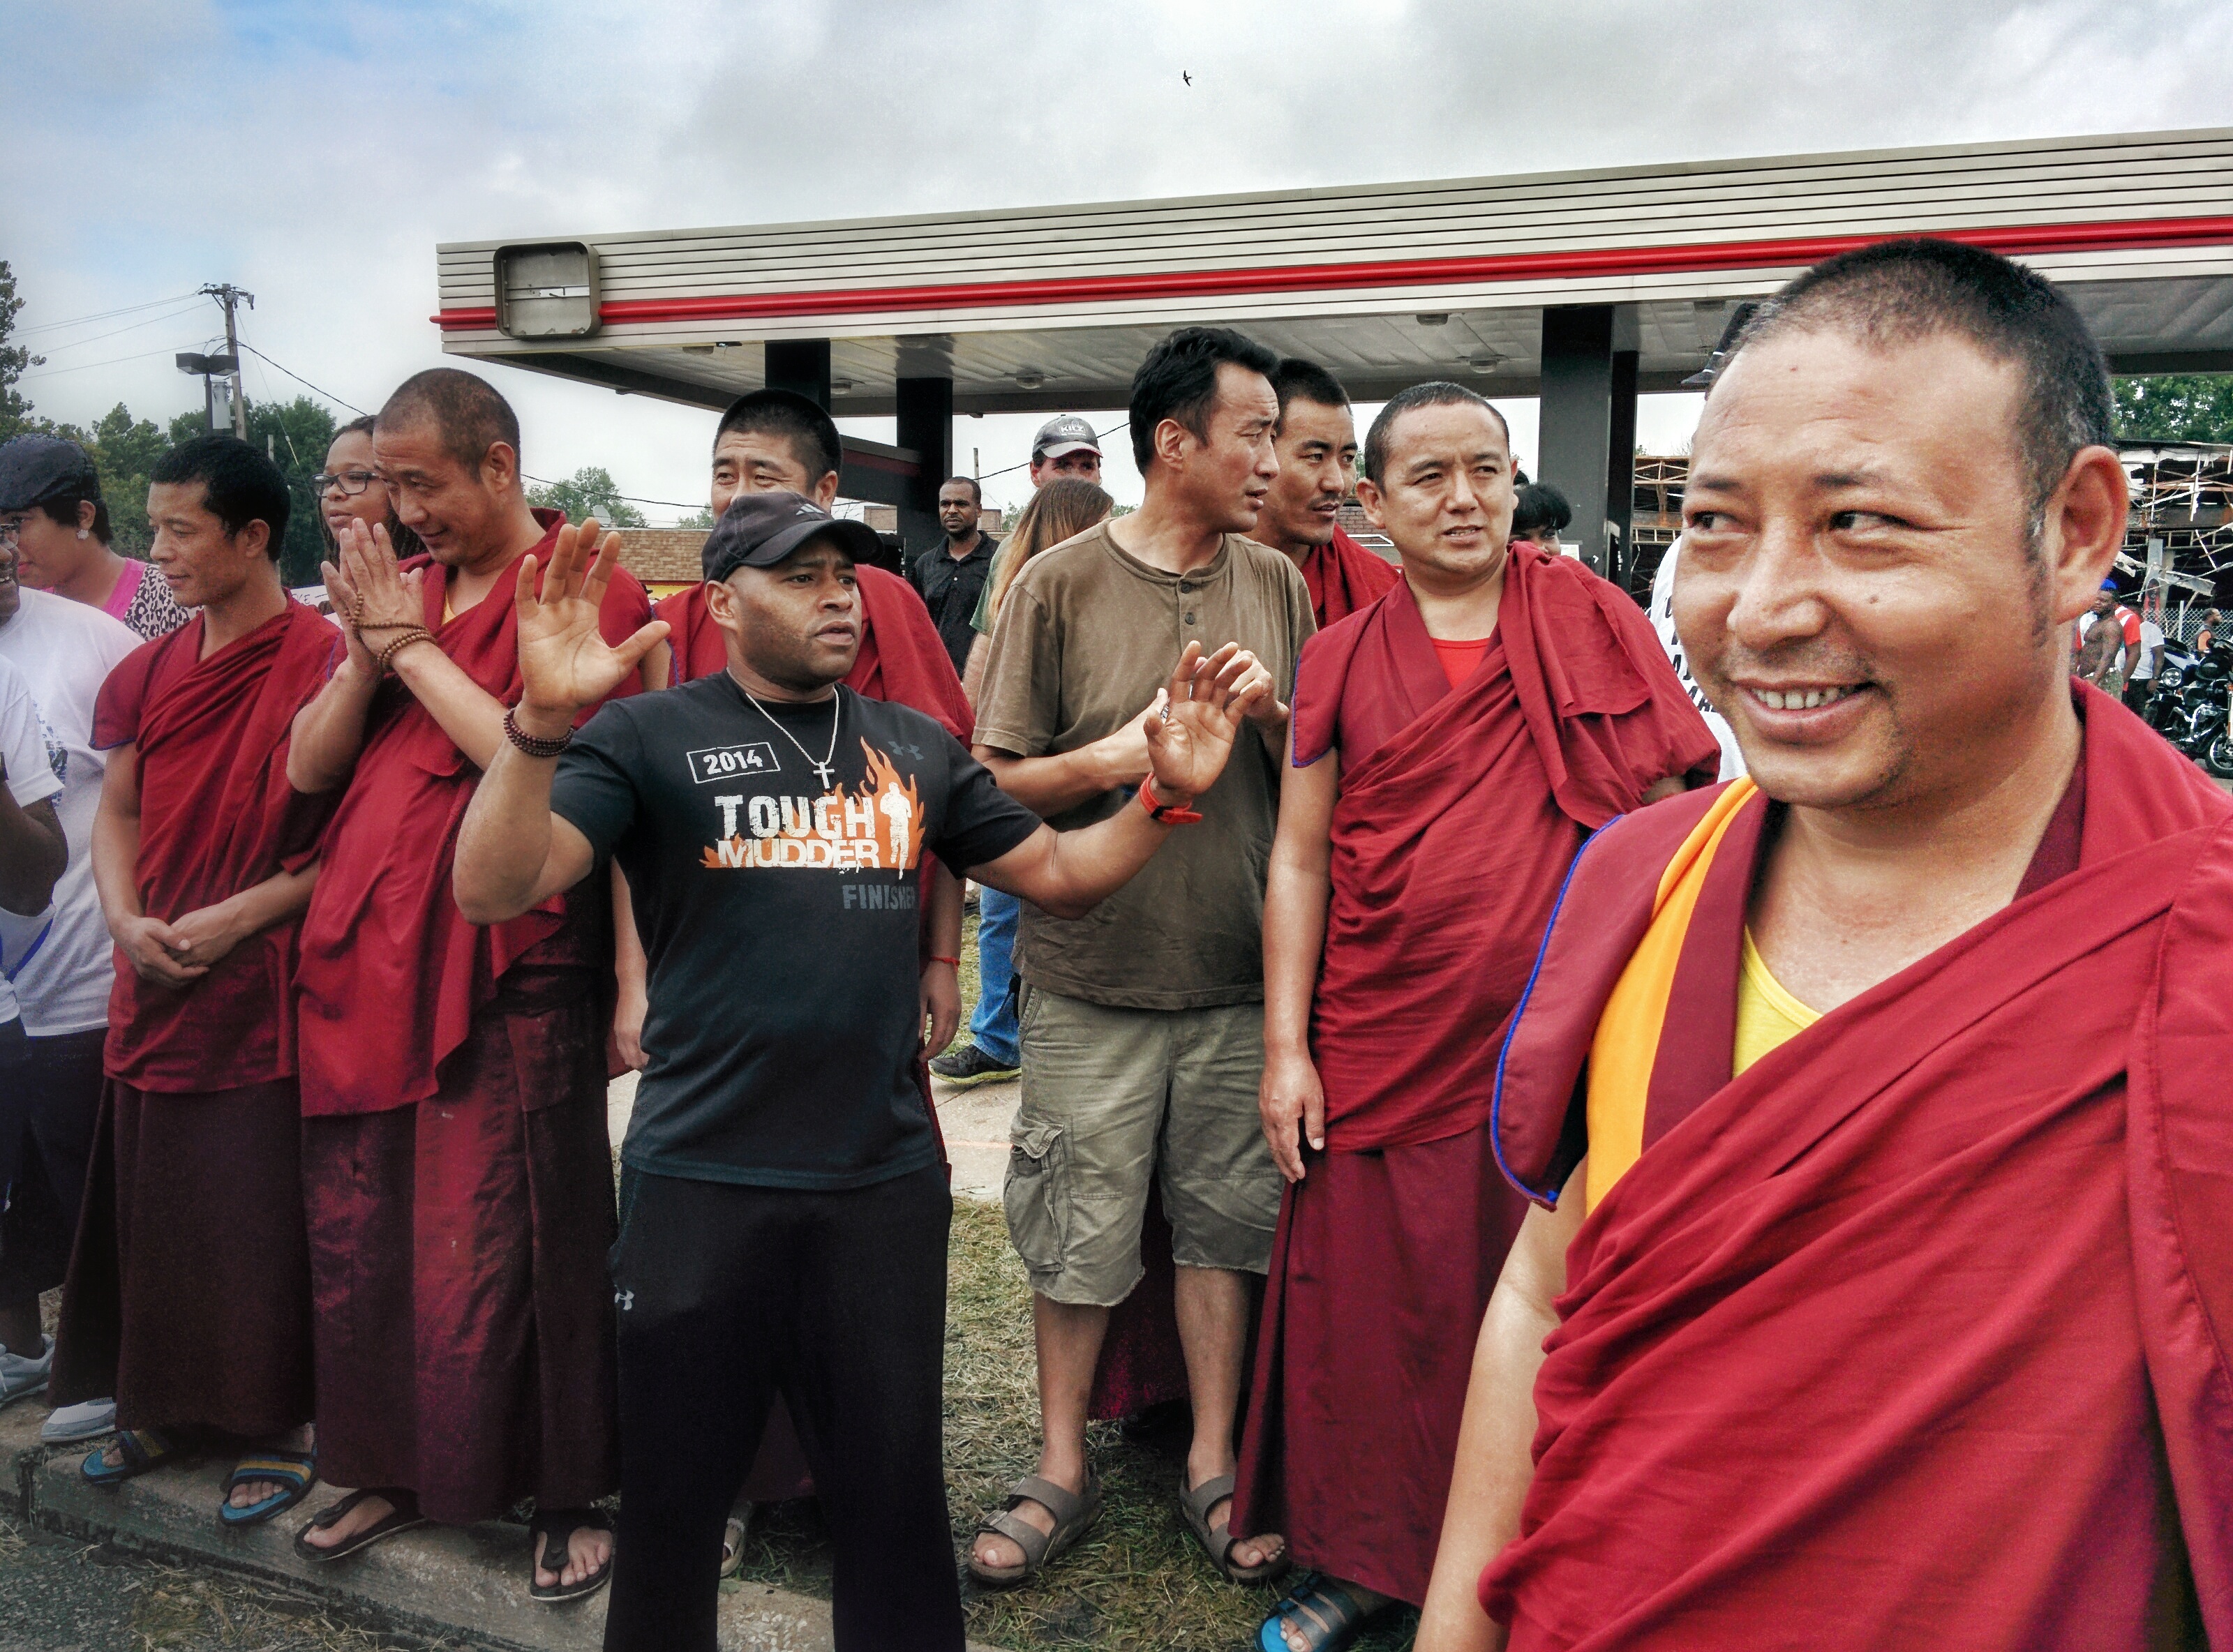 Tibetan Monks at Ferguson peaceful protest